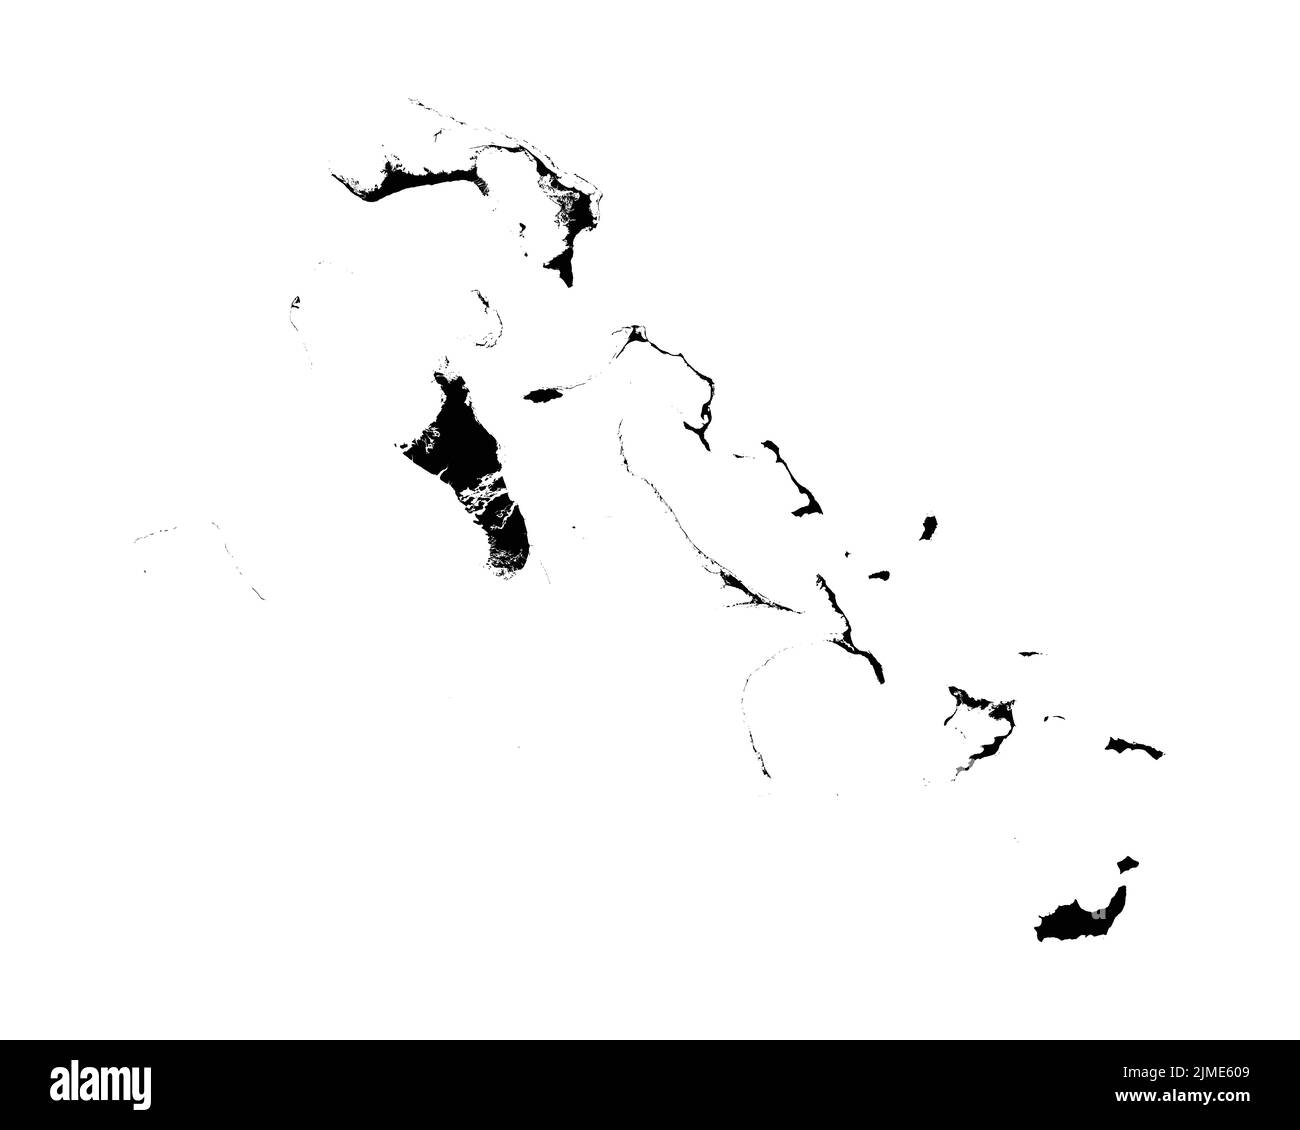 Karte Der Bahamas. Bahamian Country Map. Schwarz-Weiß nationaler Umriss Grenze Grenzform Geographie Territorium EPS Vektorgrafik Clipart Stock Vektor